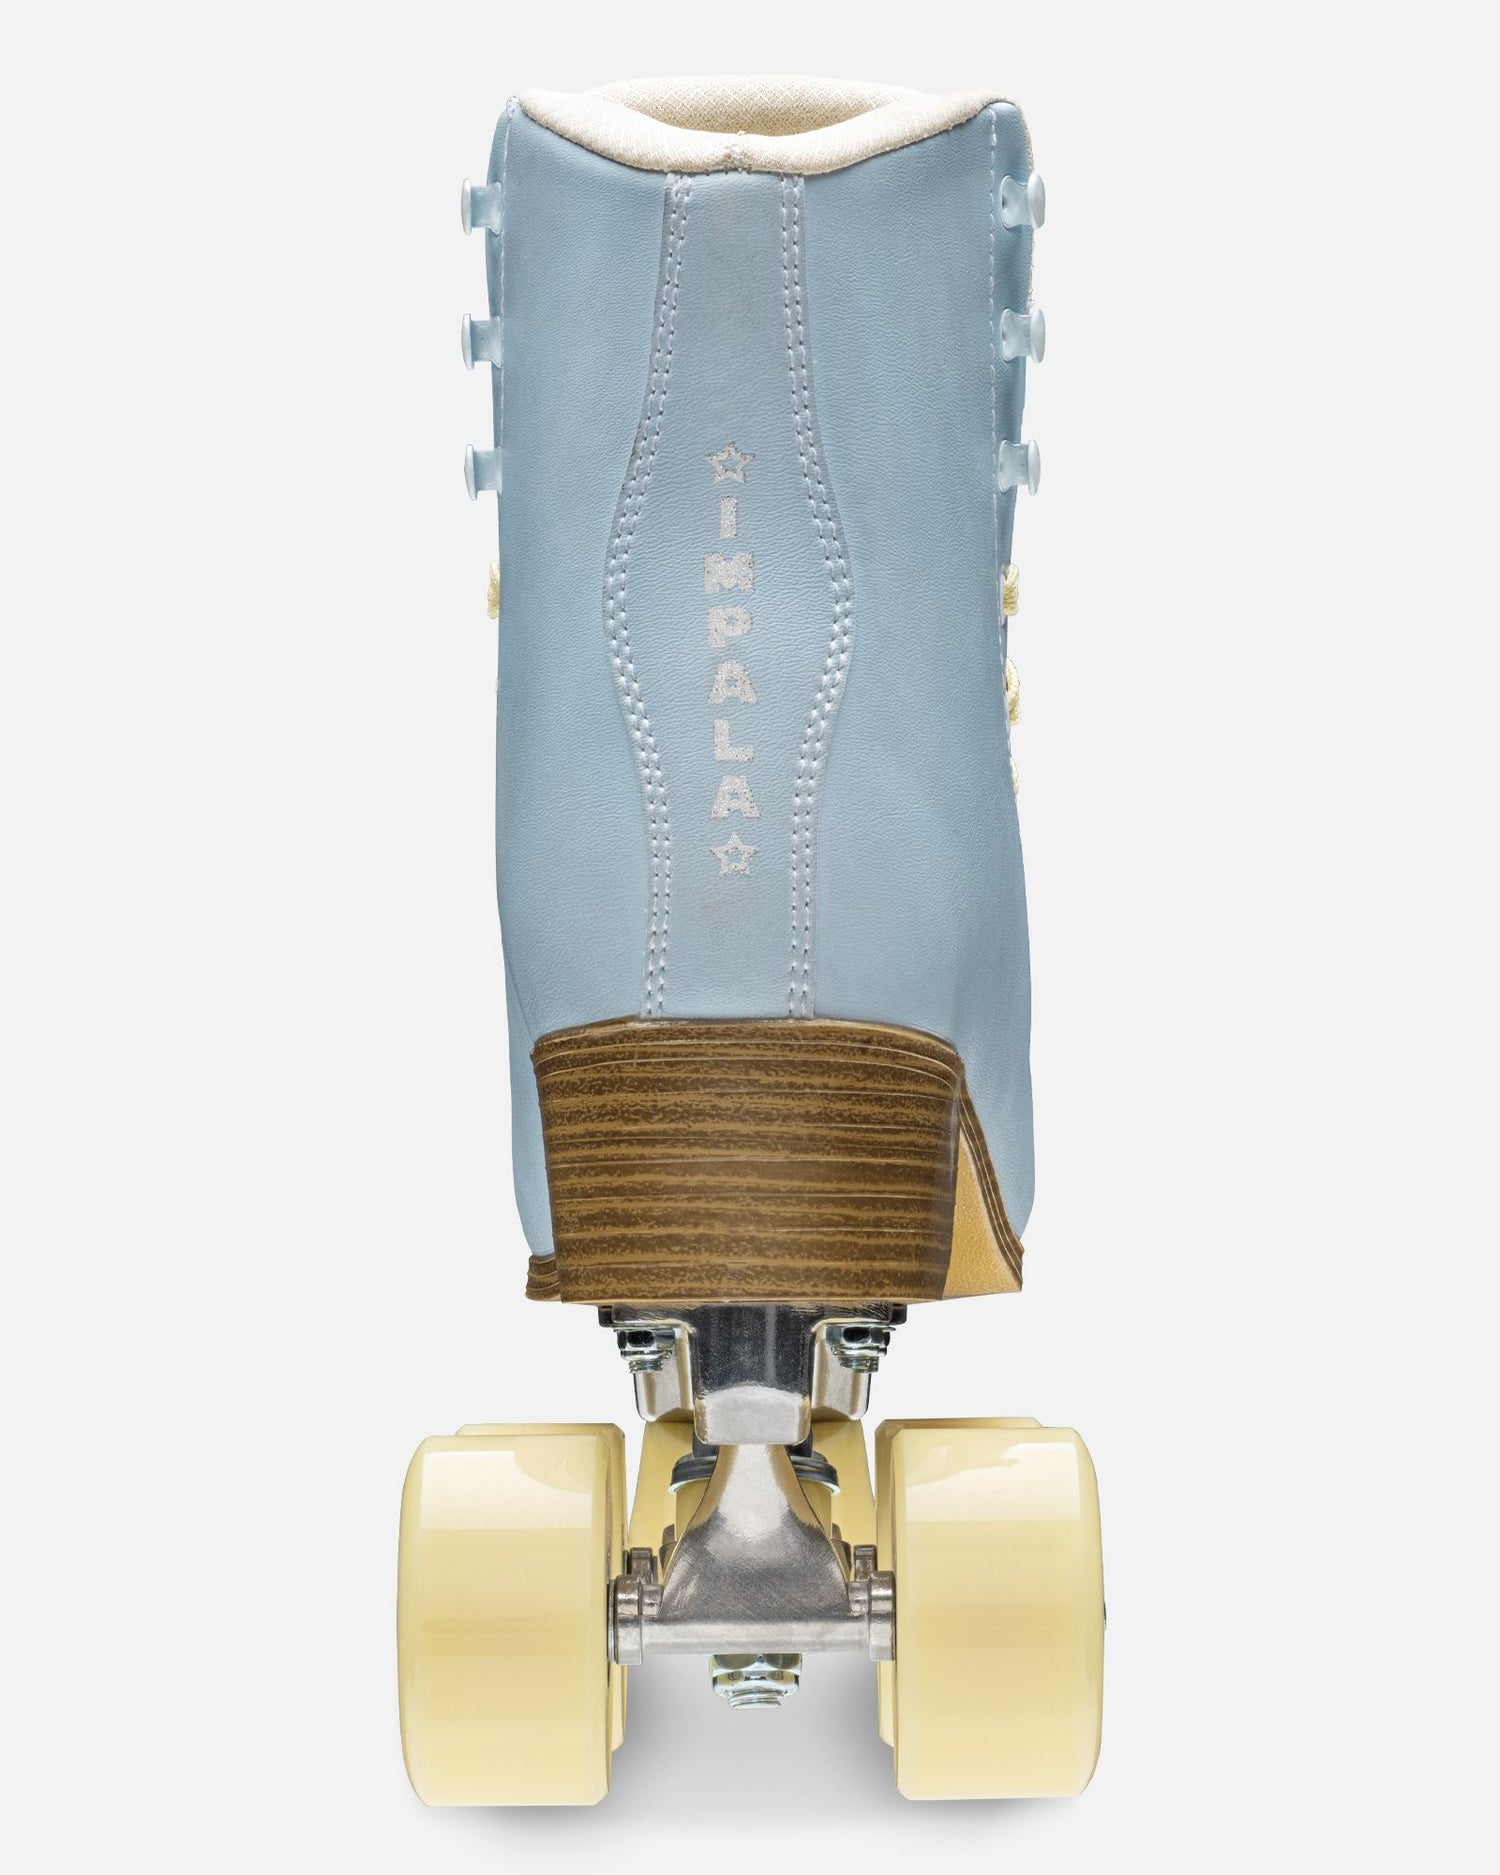 Back detailing of Impala Quad Skate - Sky Blue/Yellow